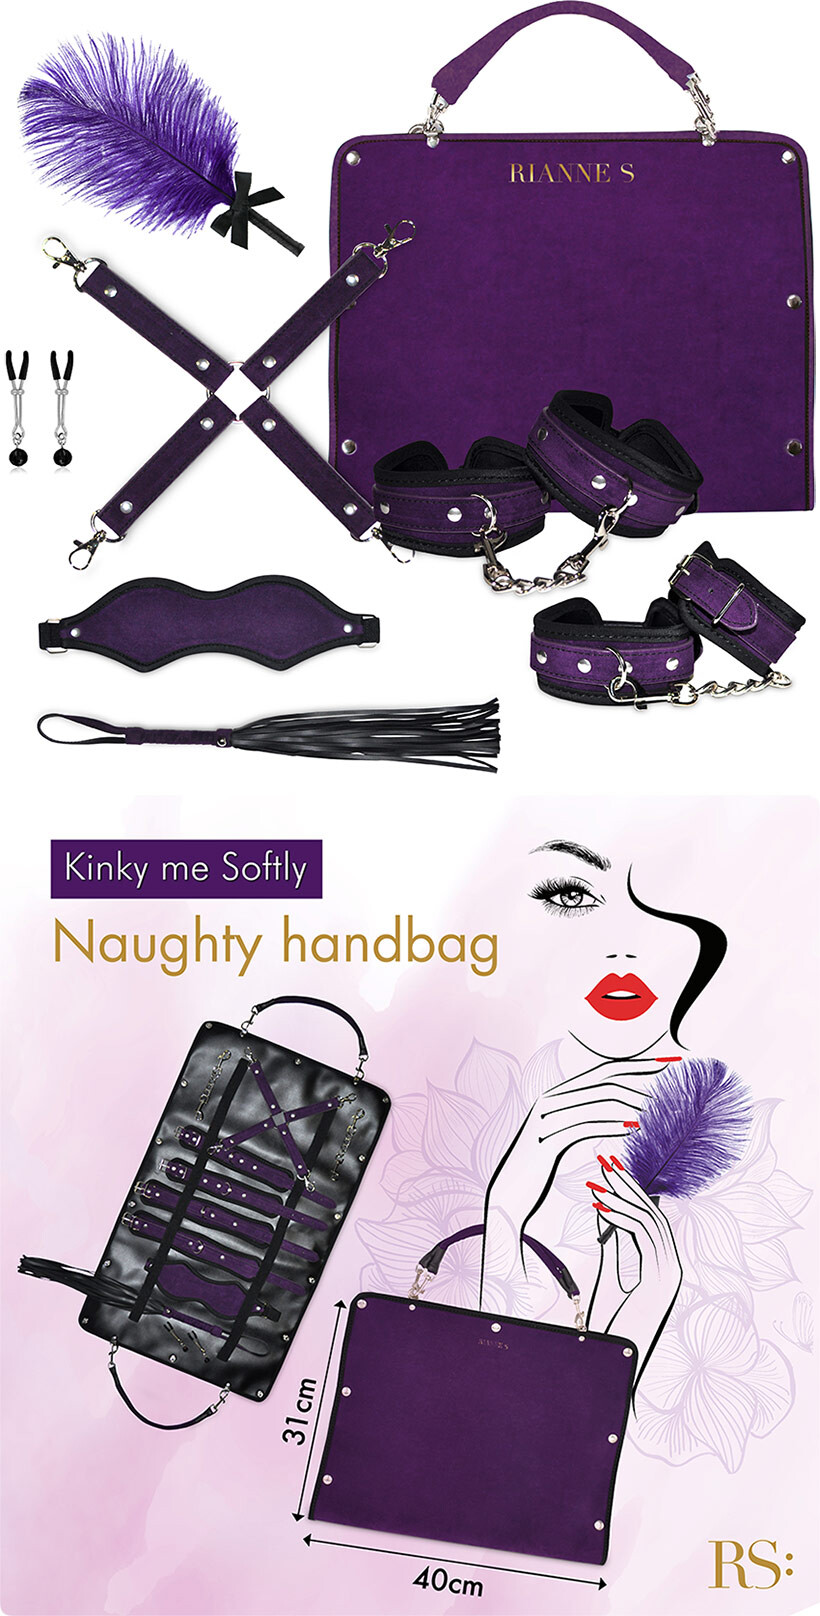 Rianne S Kinky Me Softly Tasche mit Bondage Accessoires - Violett